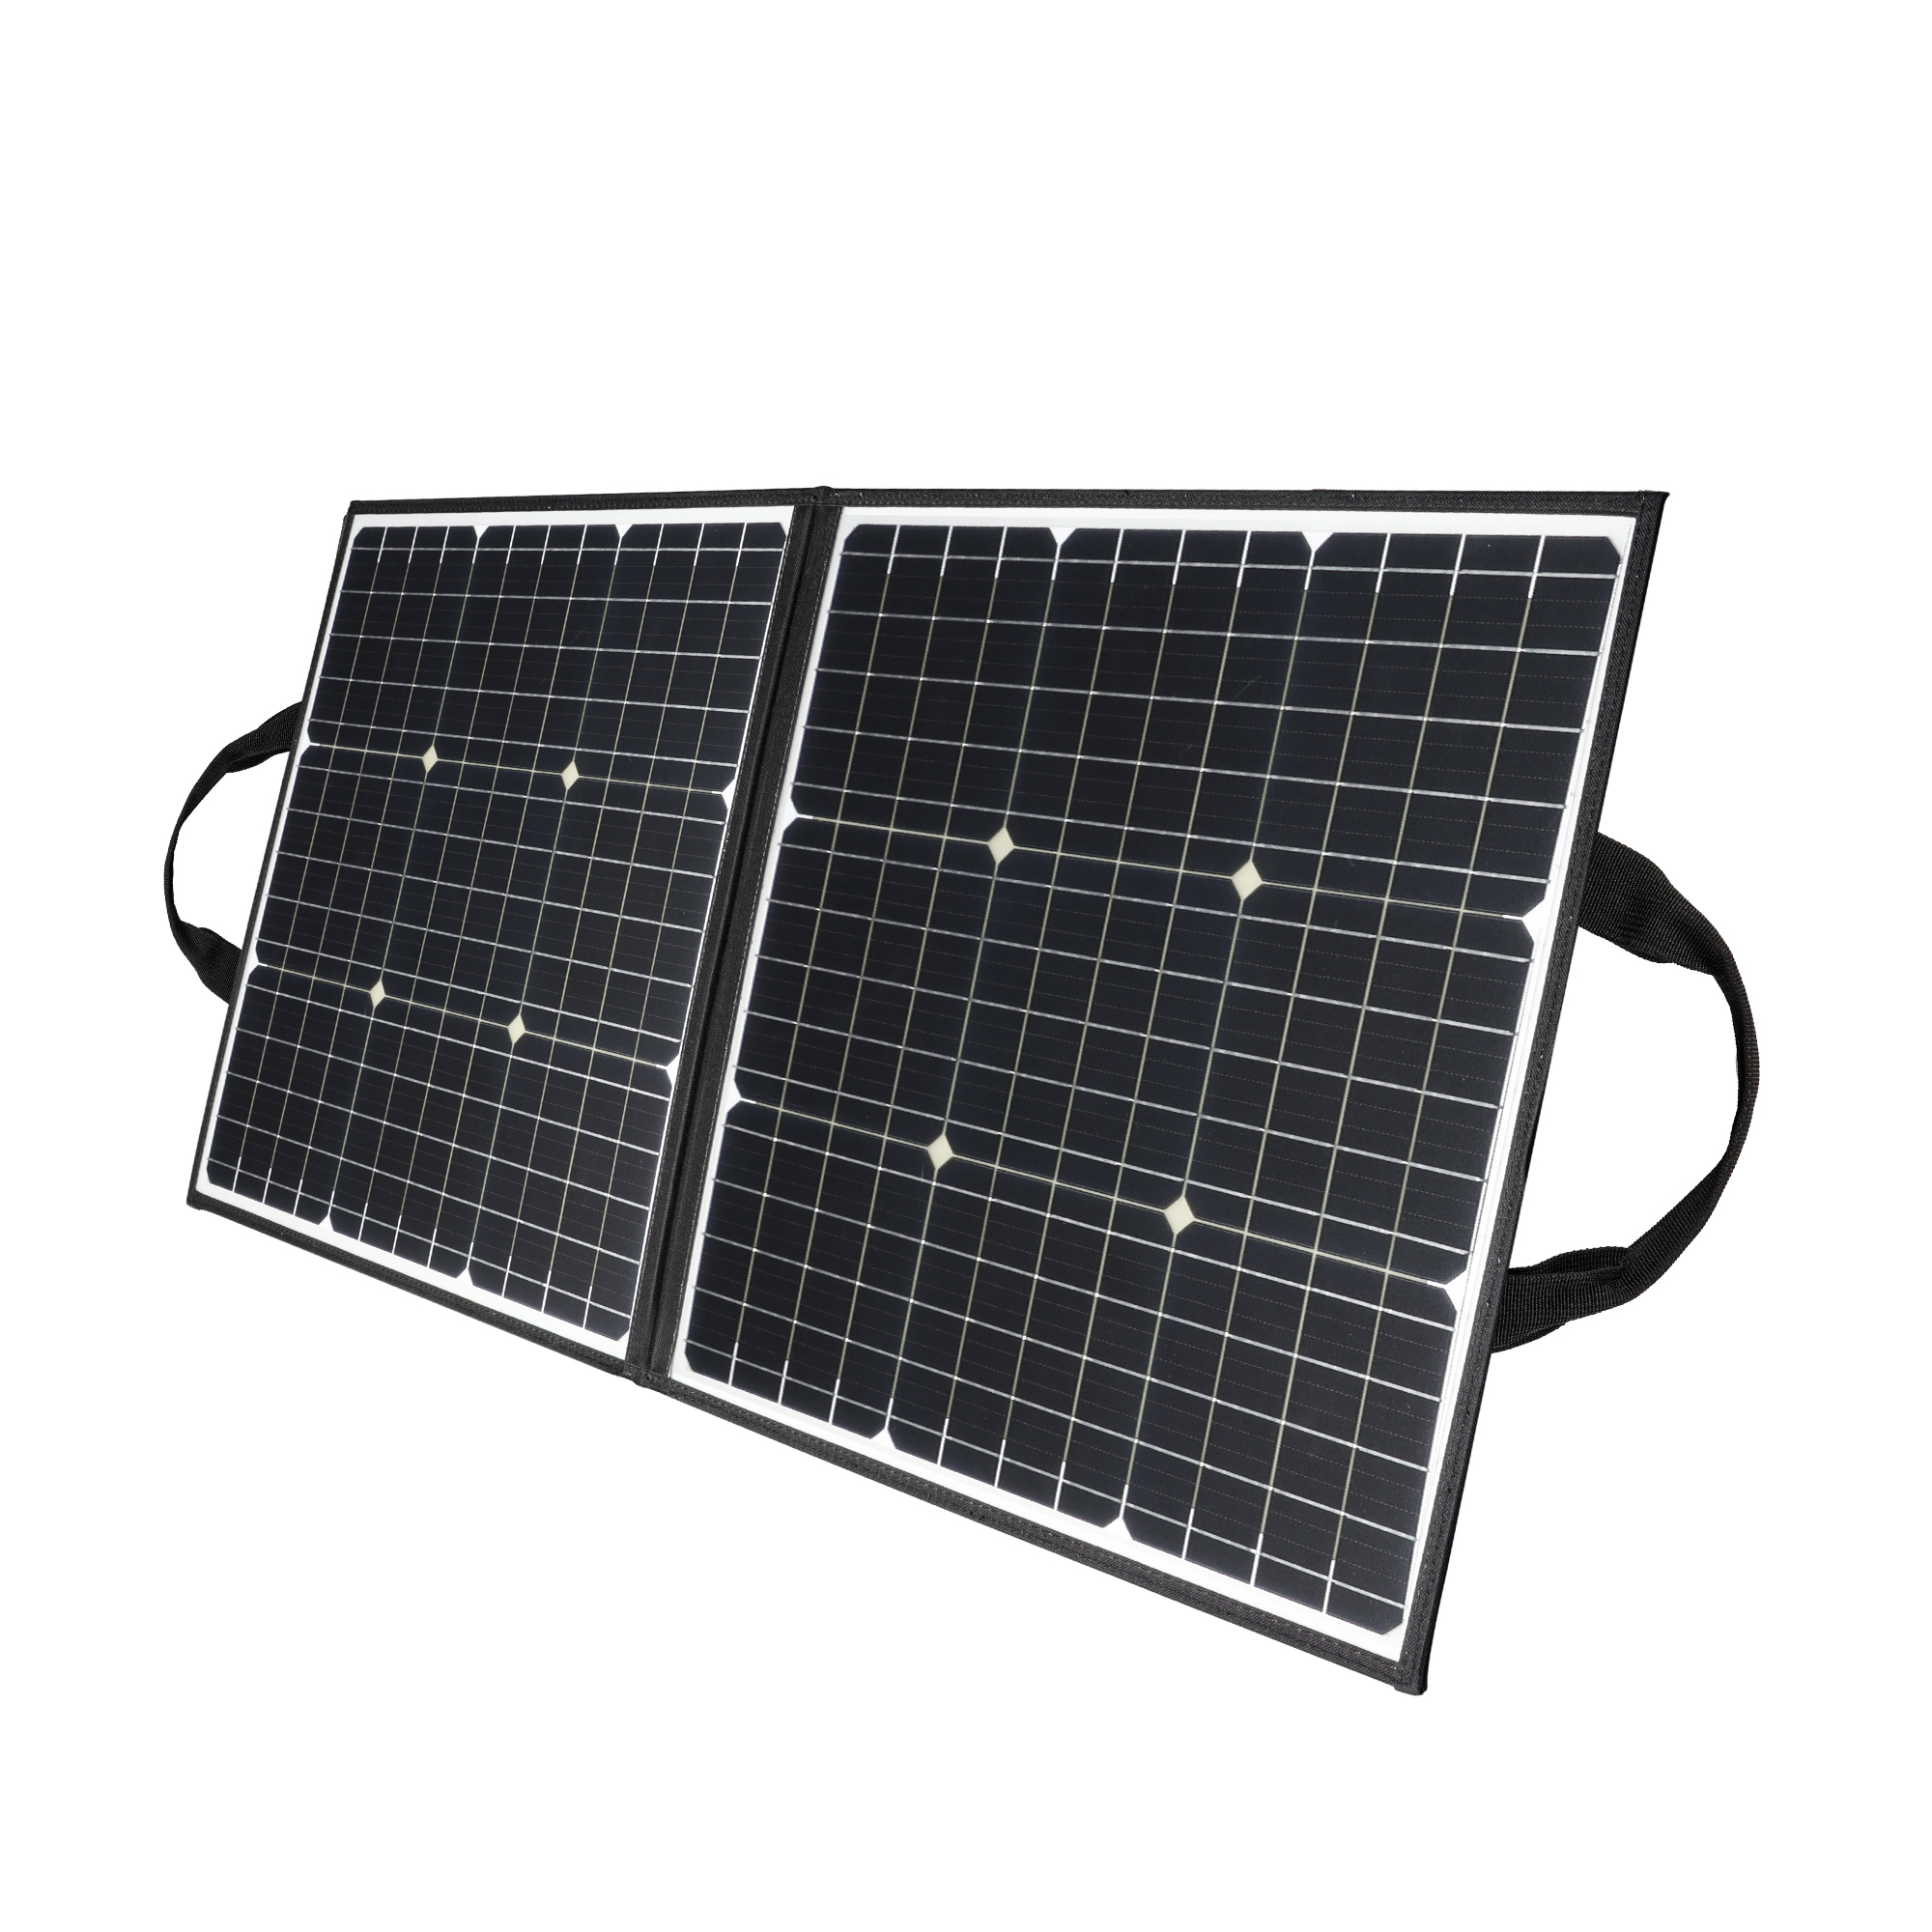 [EU/US Direct] FlashFish 100W 18V Portable Solar Panel 5V USB Foldable Solar Cells Outdoor Power Supply Camping Garden For Power Station